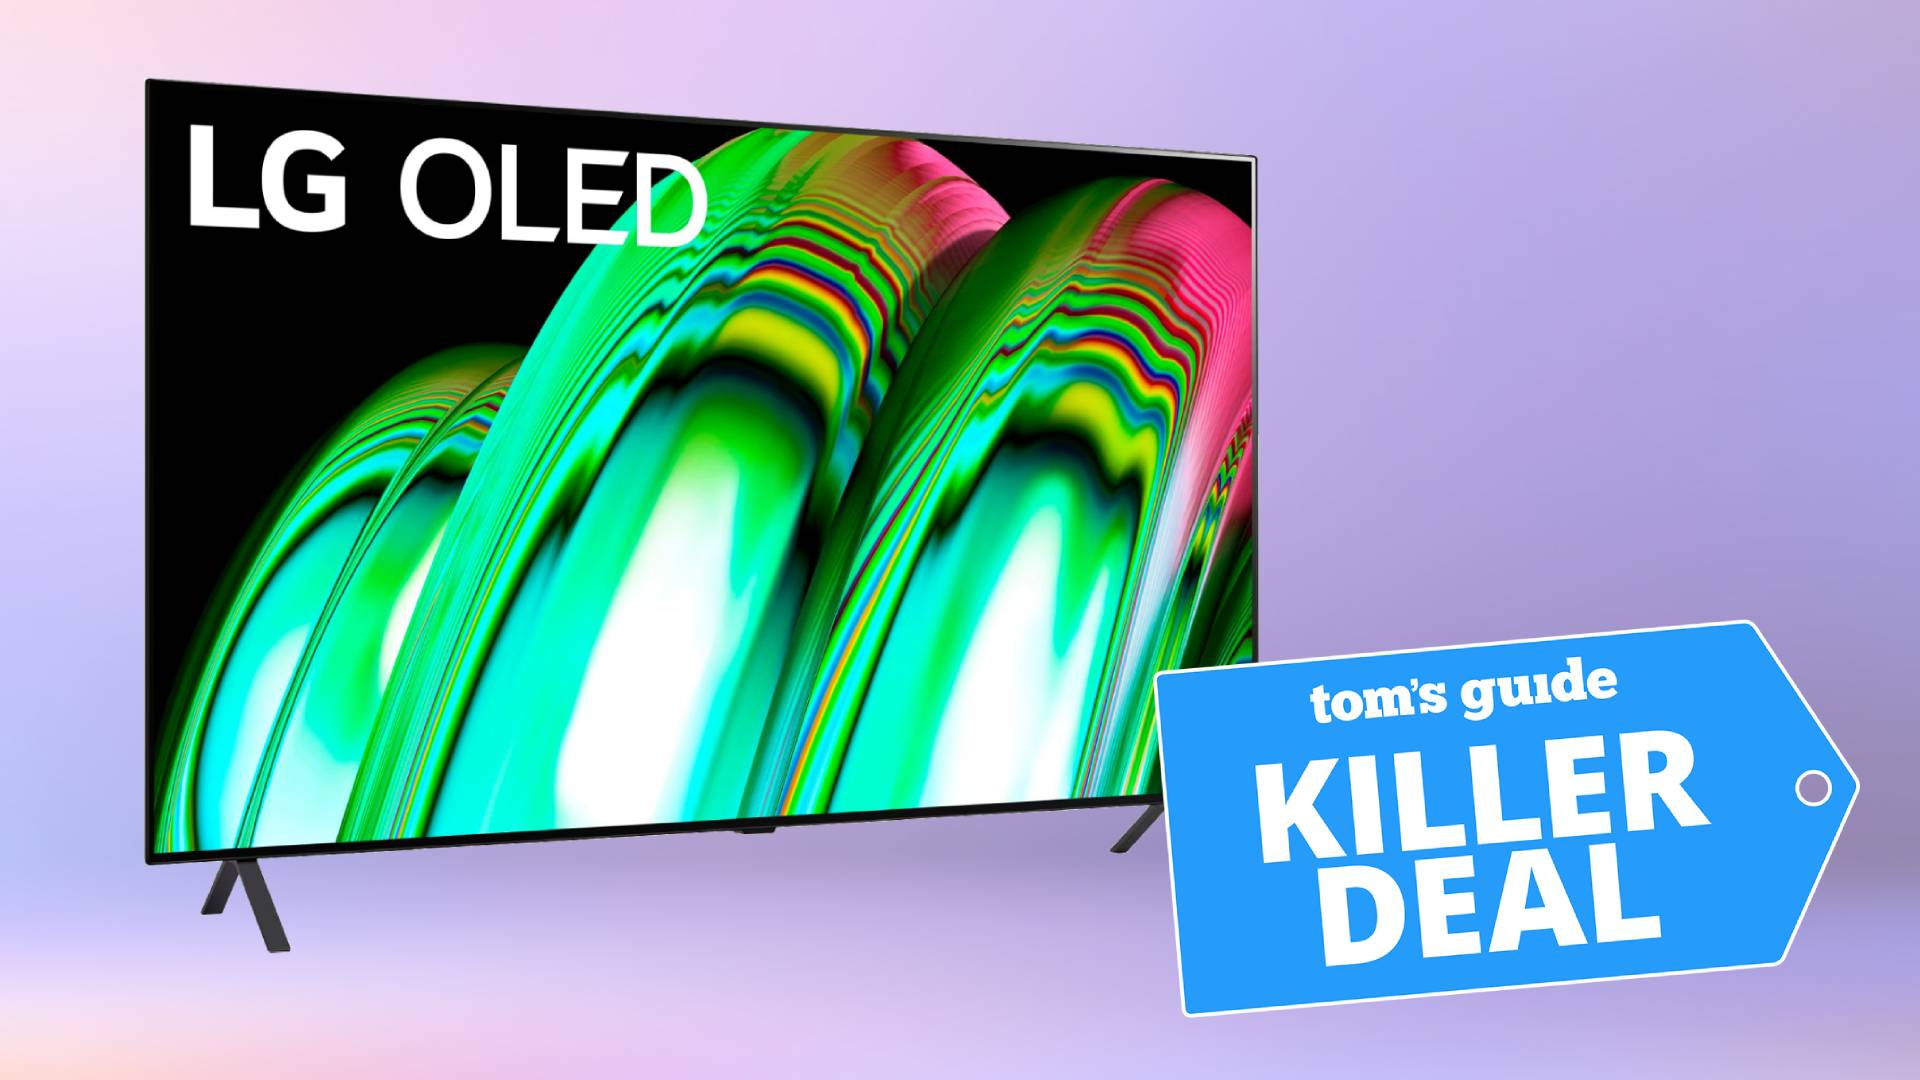 Immagine TV LG A2 OLED 4K su sfondo viola